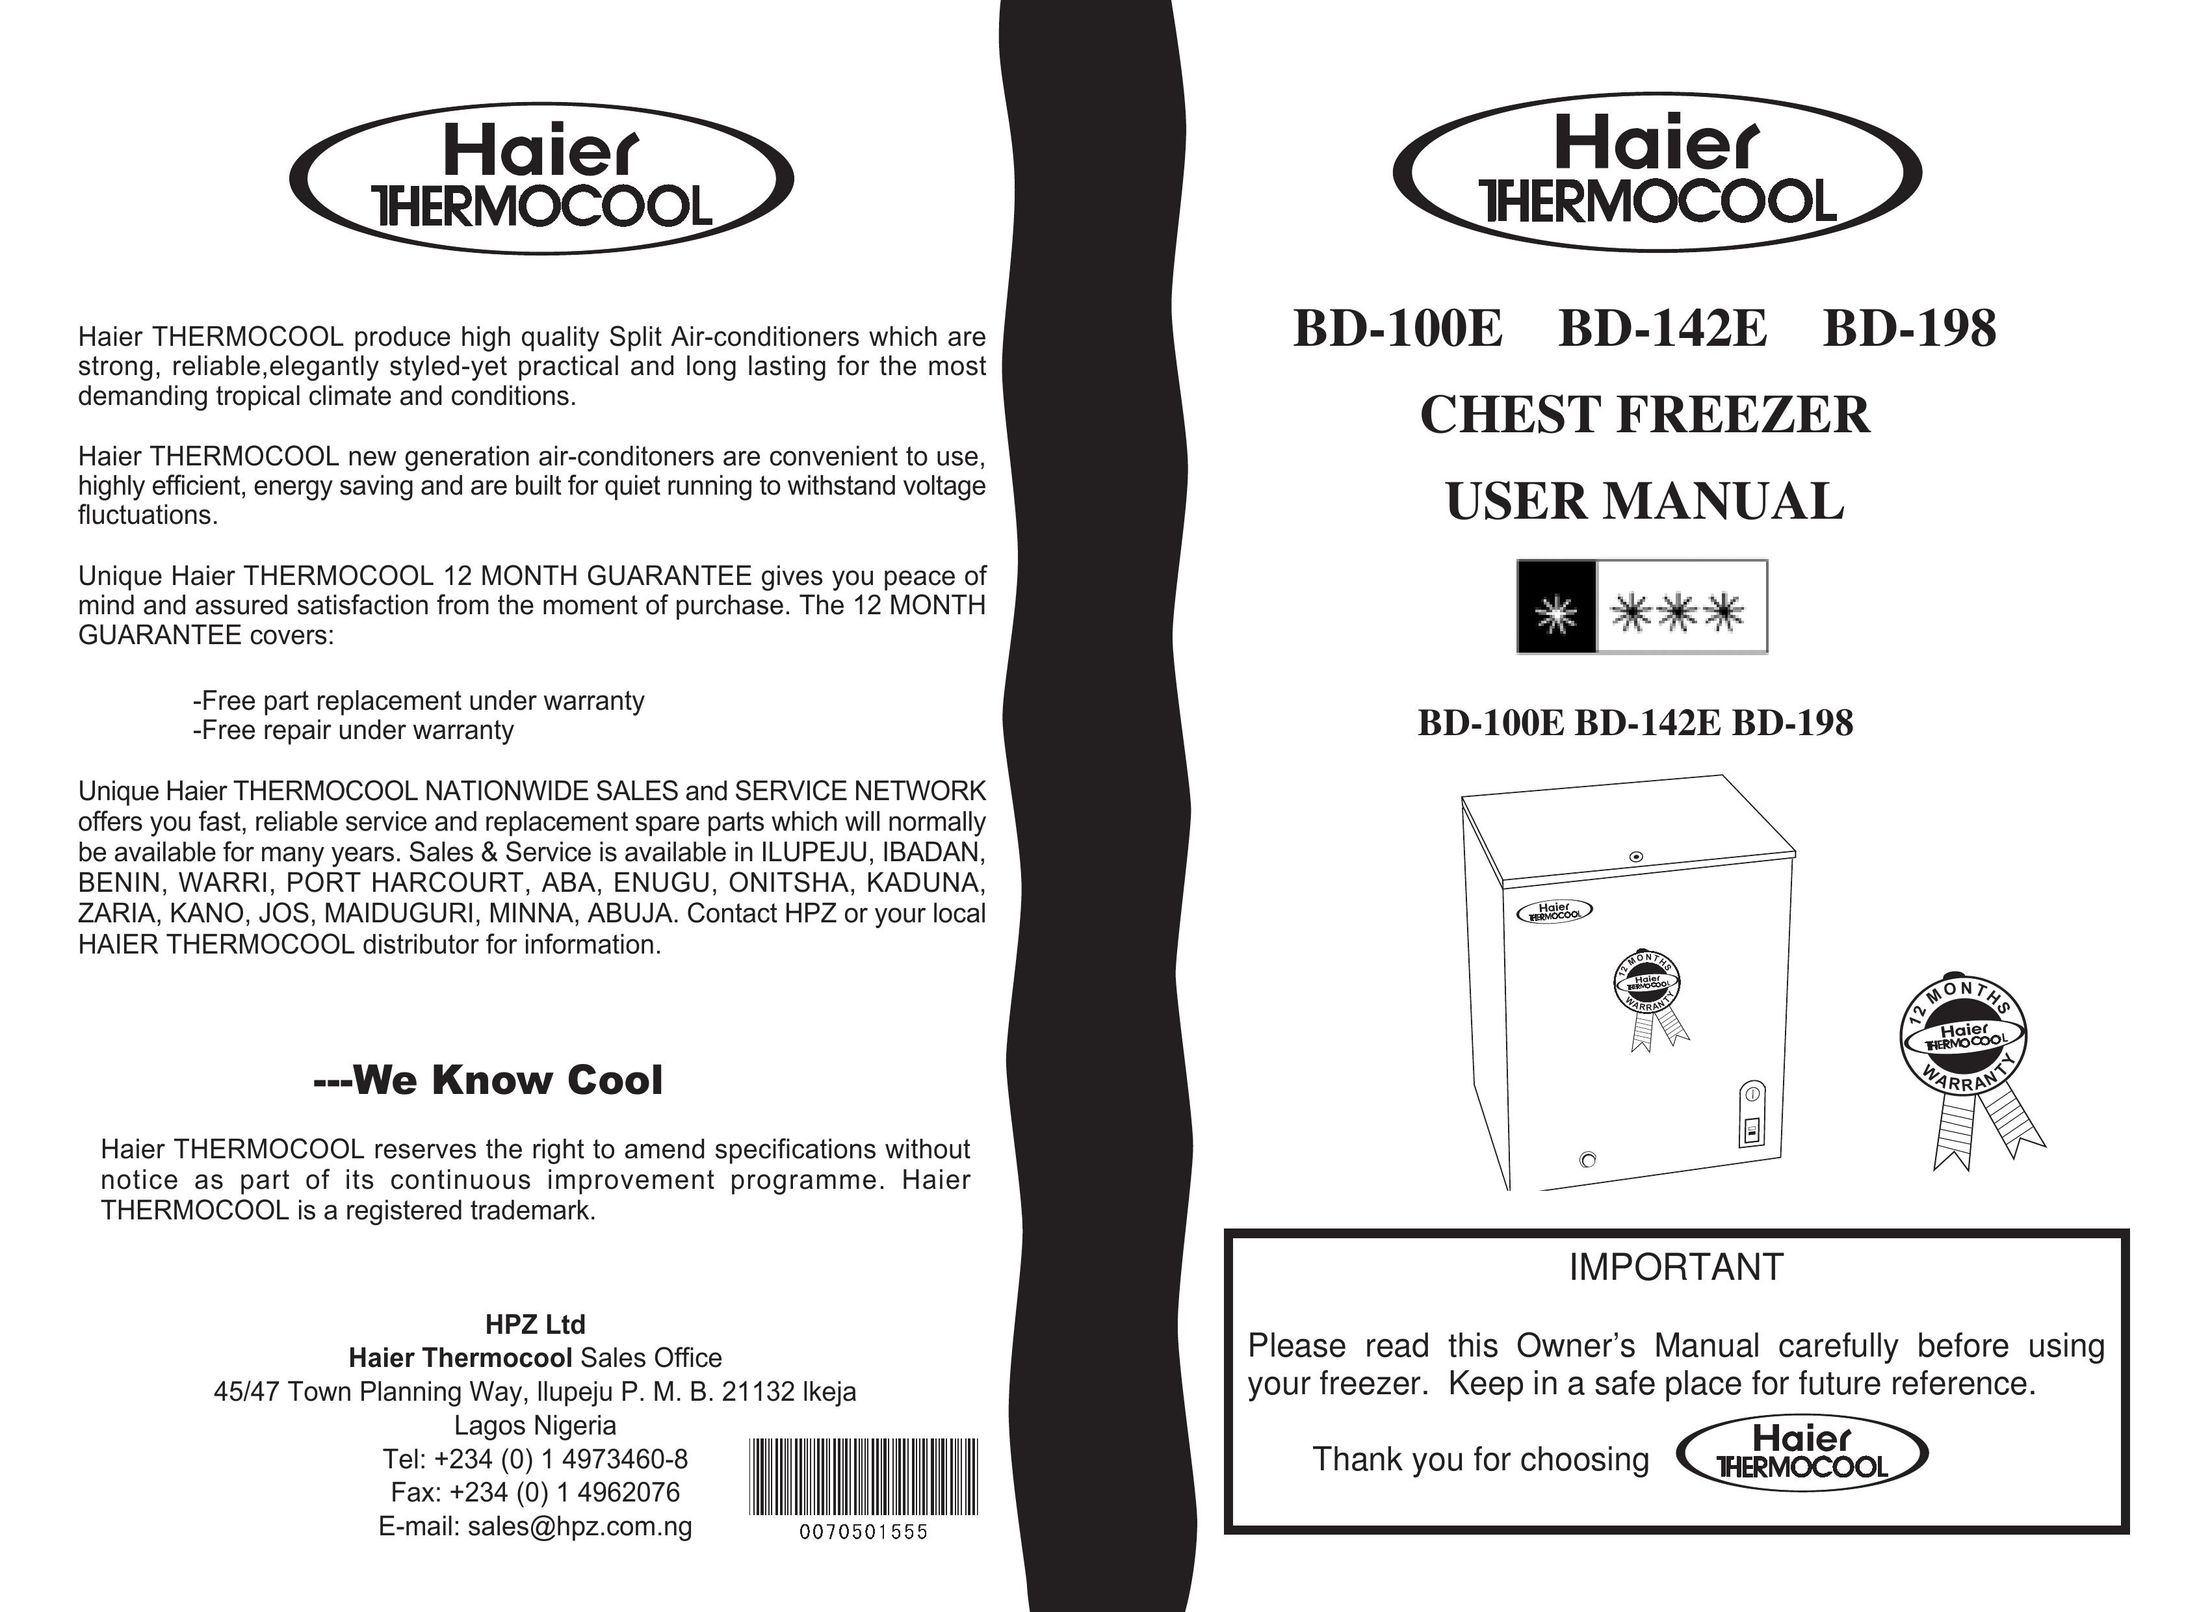 Haier BD-142E Freezer User Manual